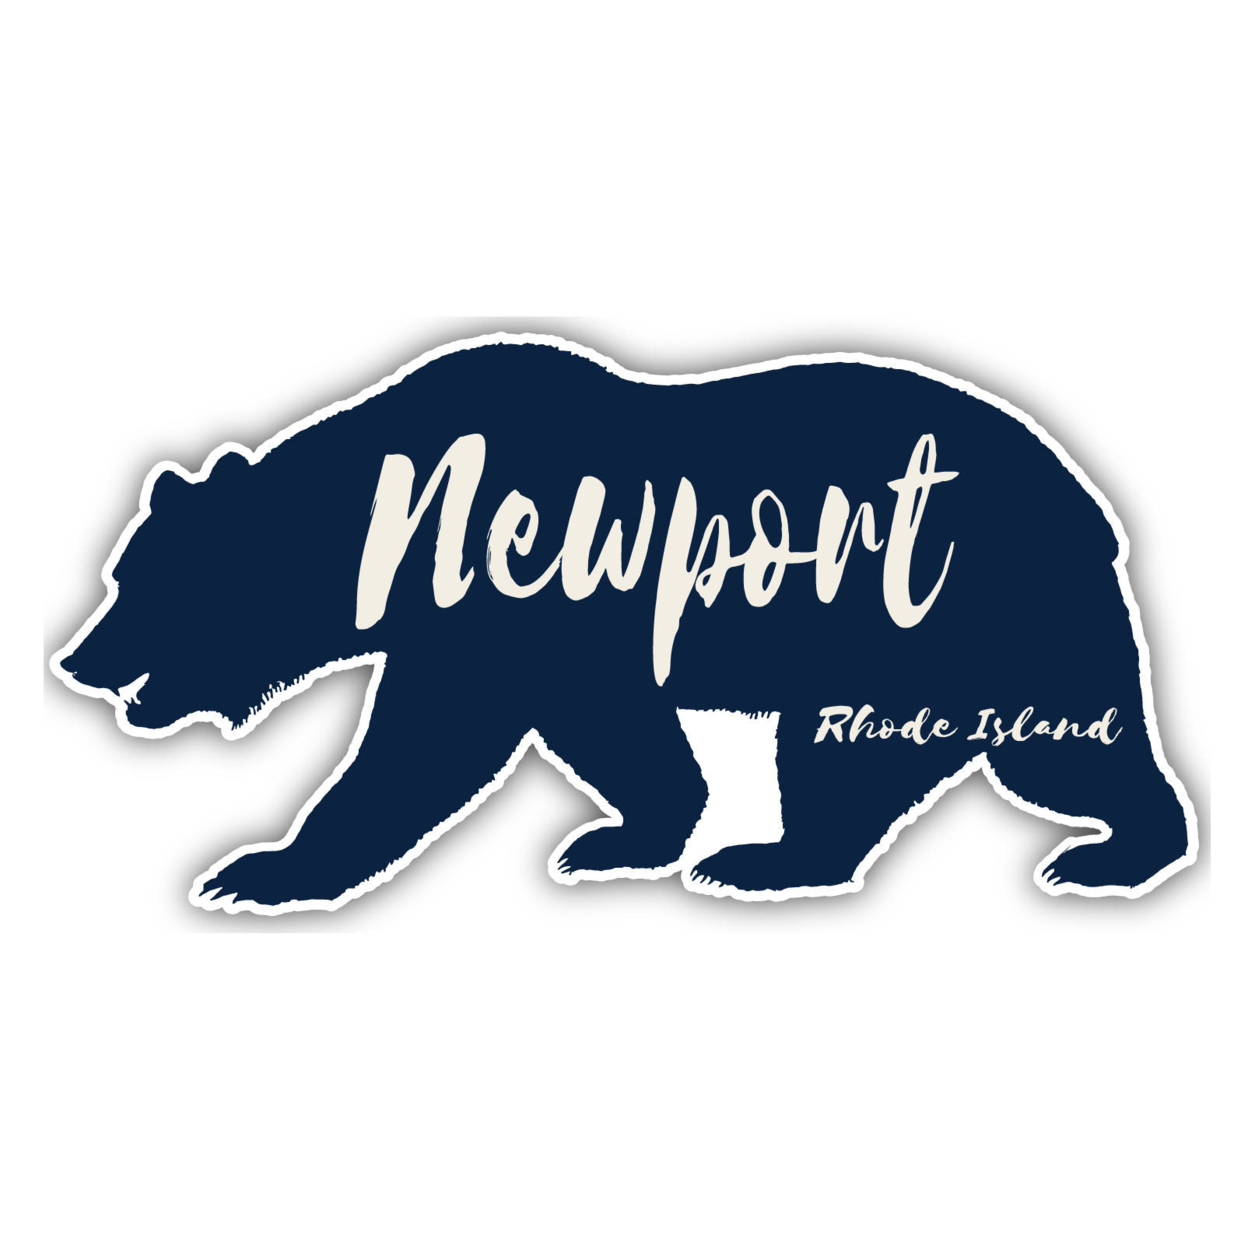 Newport Rhode Island Souvenir Decorative Stickers (Choose Theme And Size) - Single Unit, 2-Inch, Tent